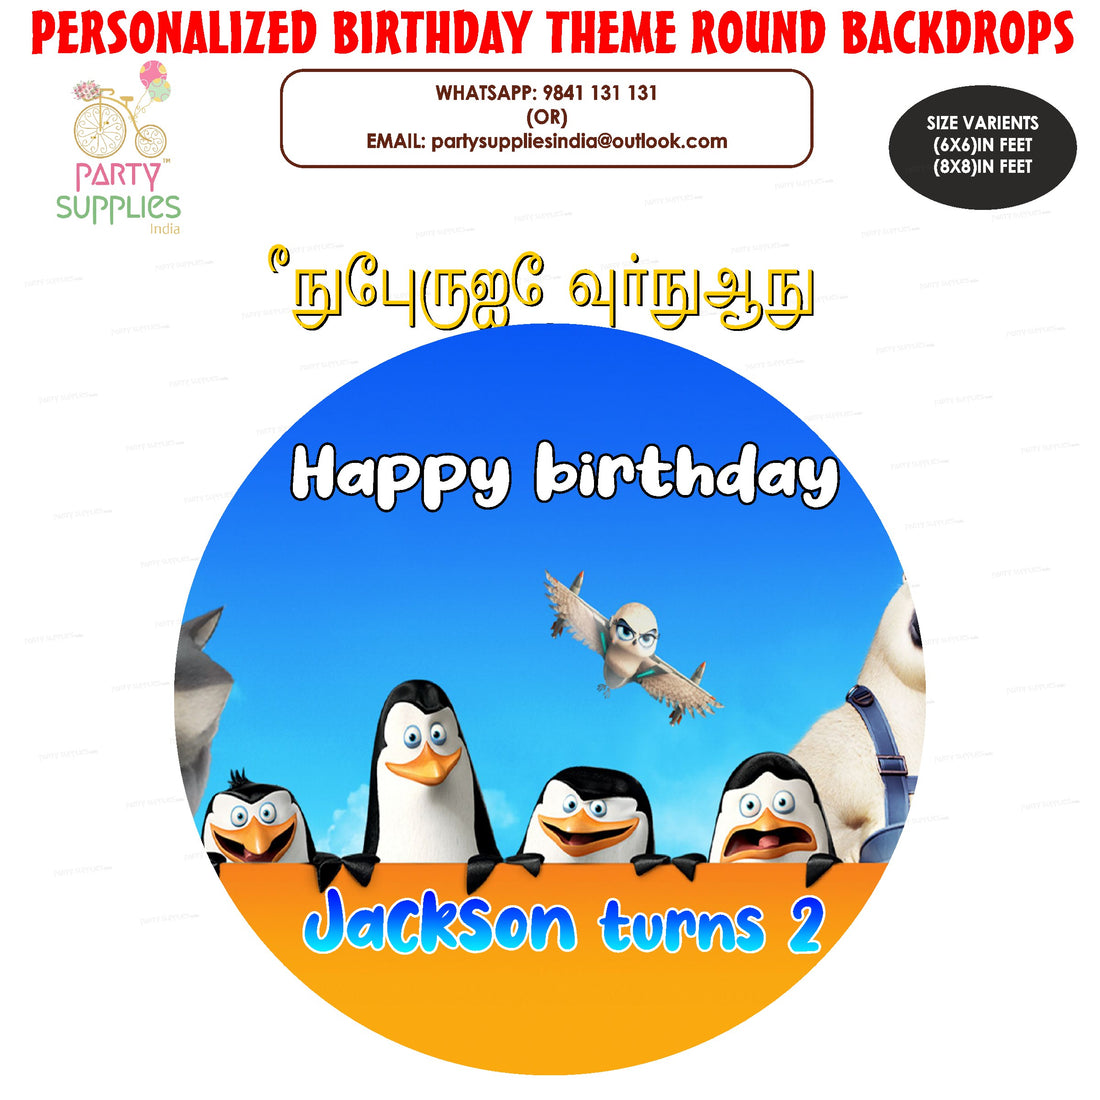 PSI penguin Personalized Theme Round  Backdrop